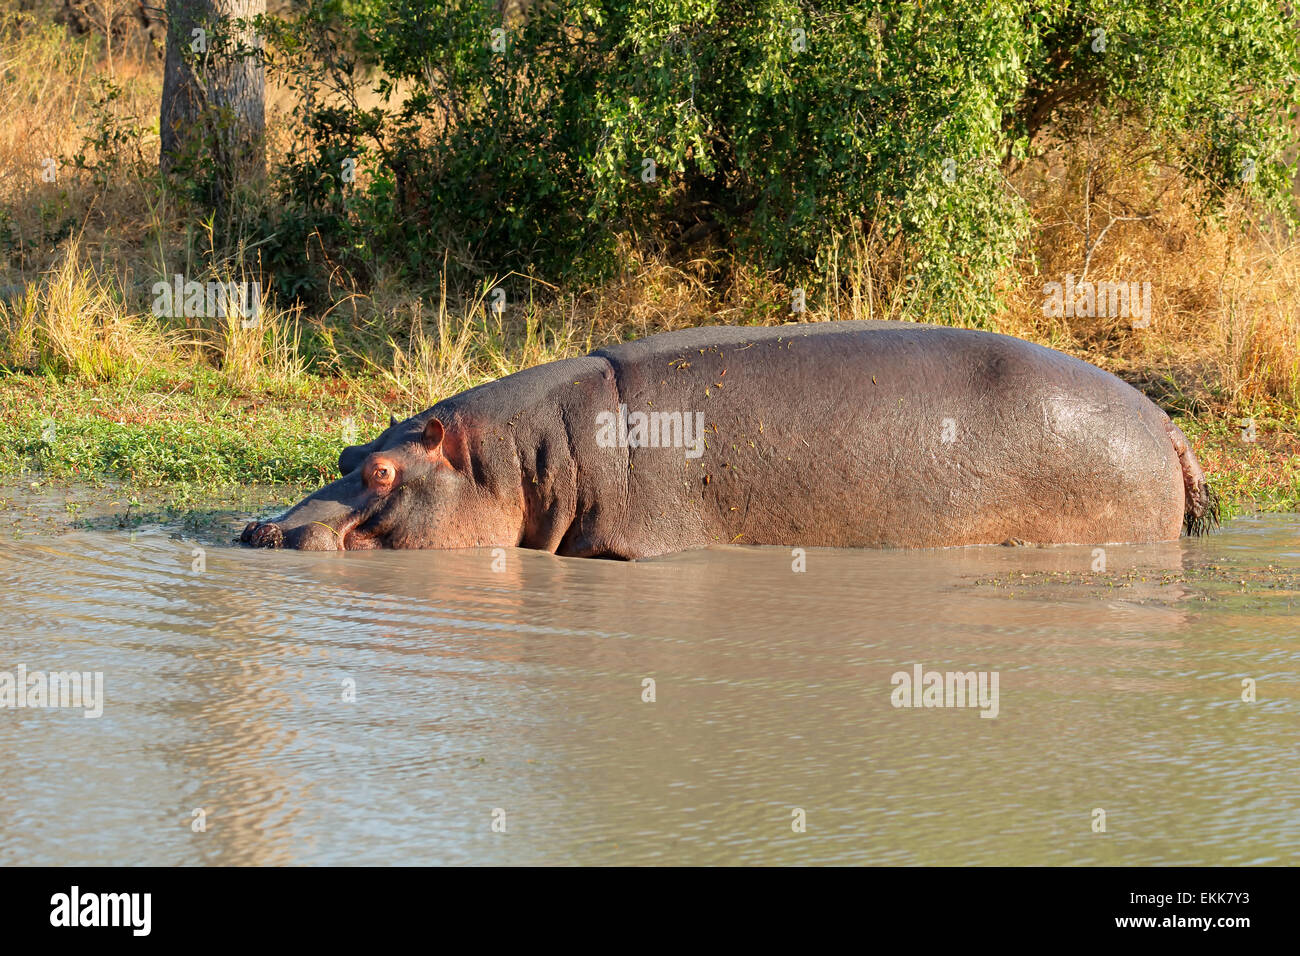 Hippo (Hippopotamus amphibius) in shallow water, Sabie-Sand nature reserve, South Africa Stock Photo